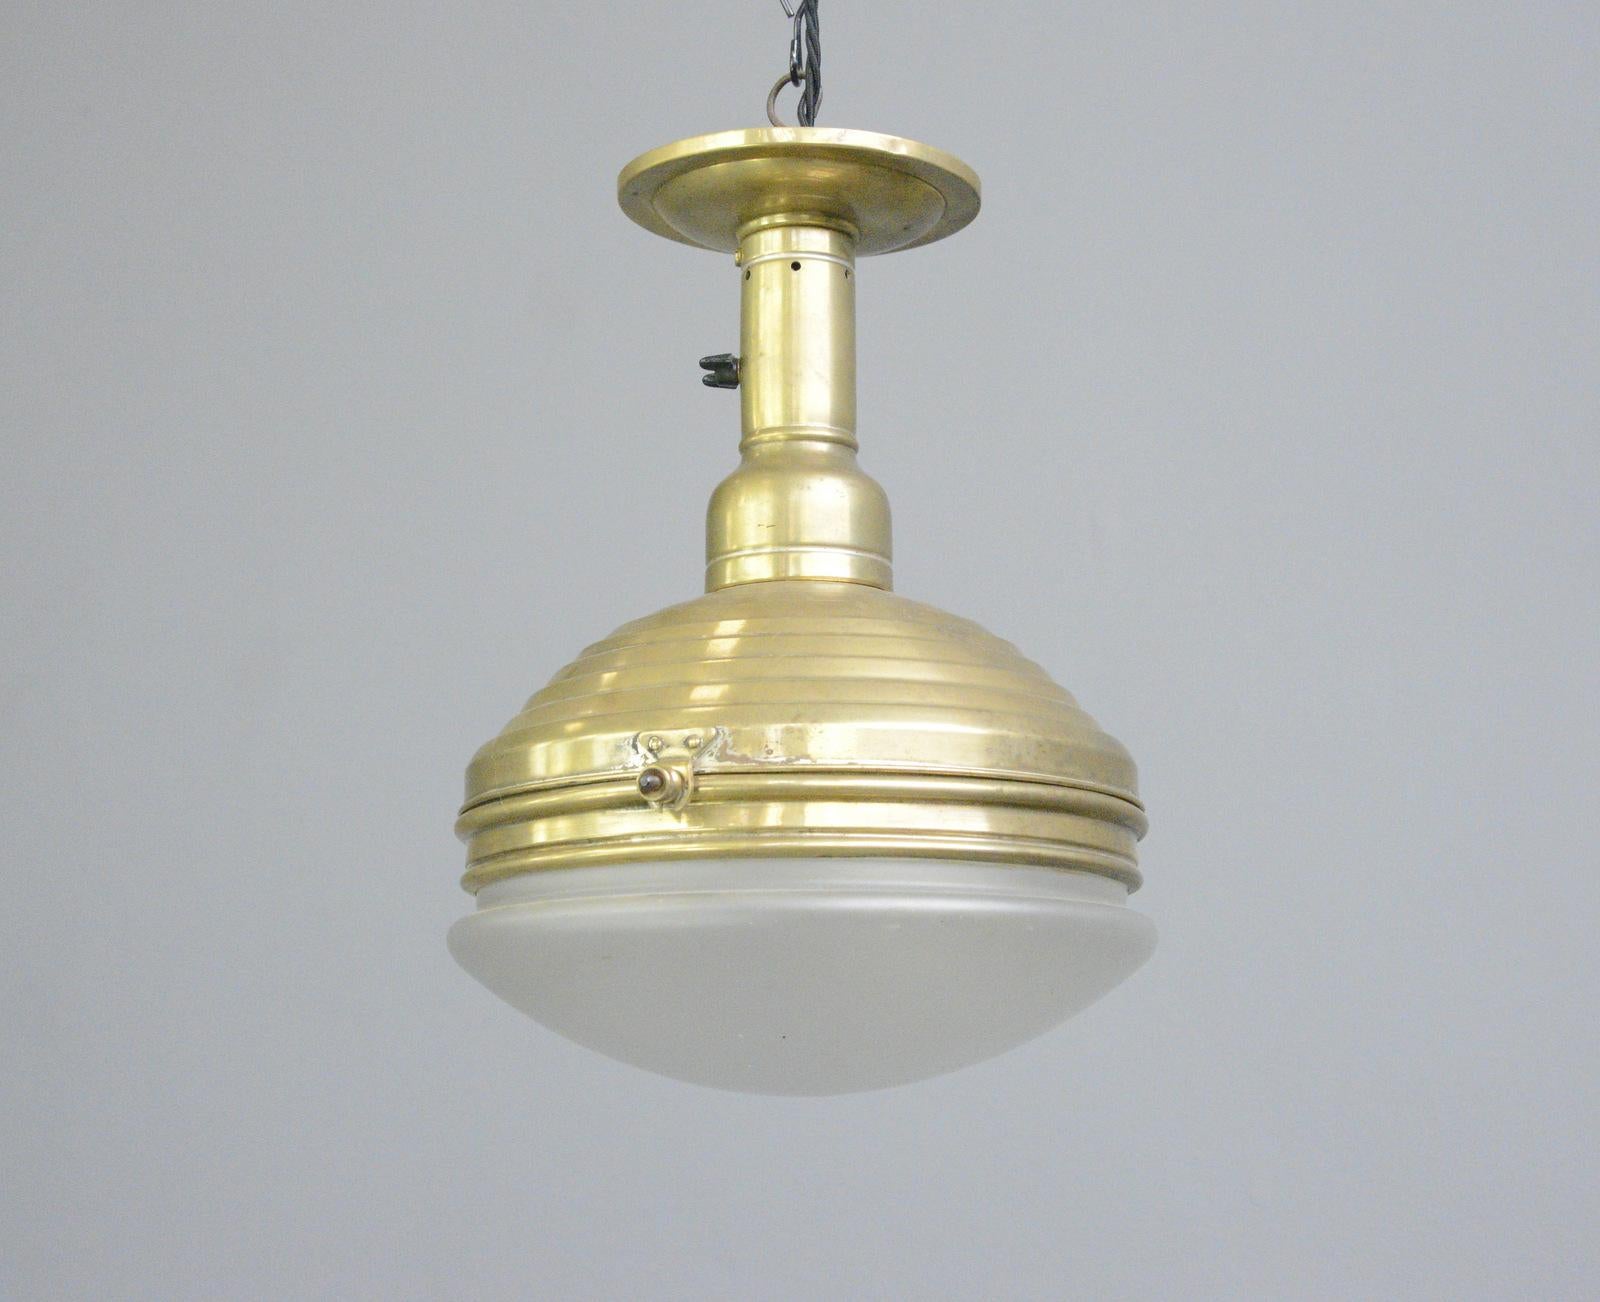 German Brass Ceiling Light by Carl Zeiss Jena Circa 1920s